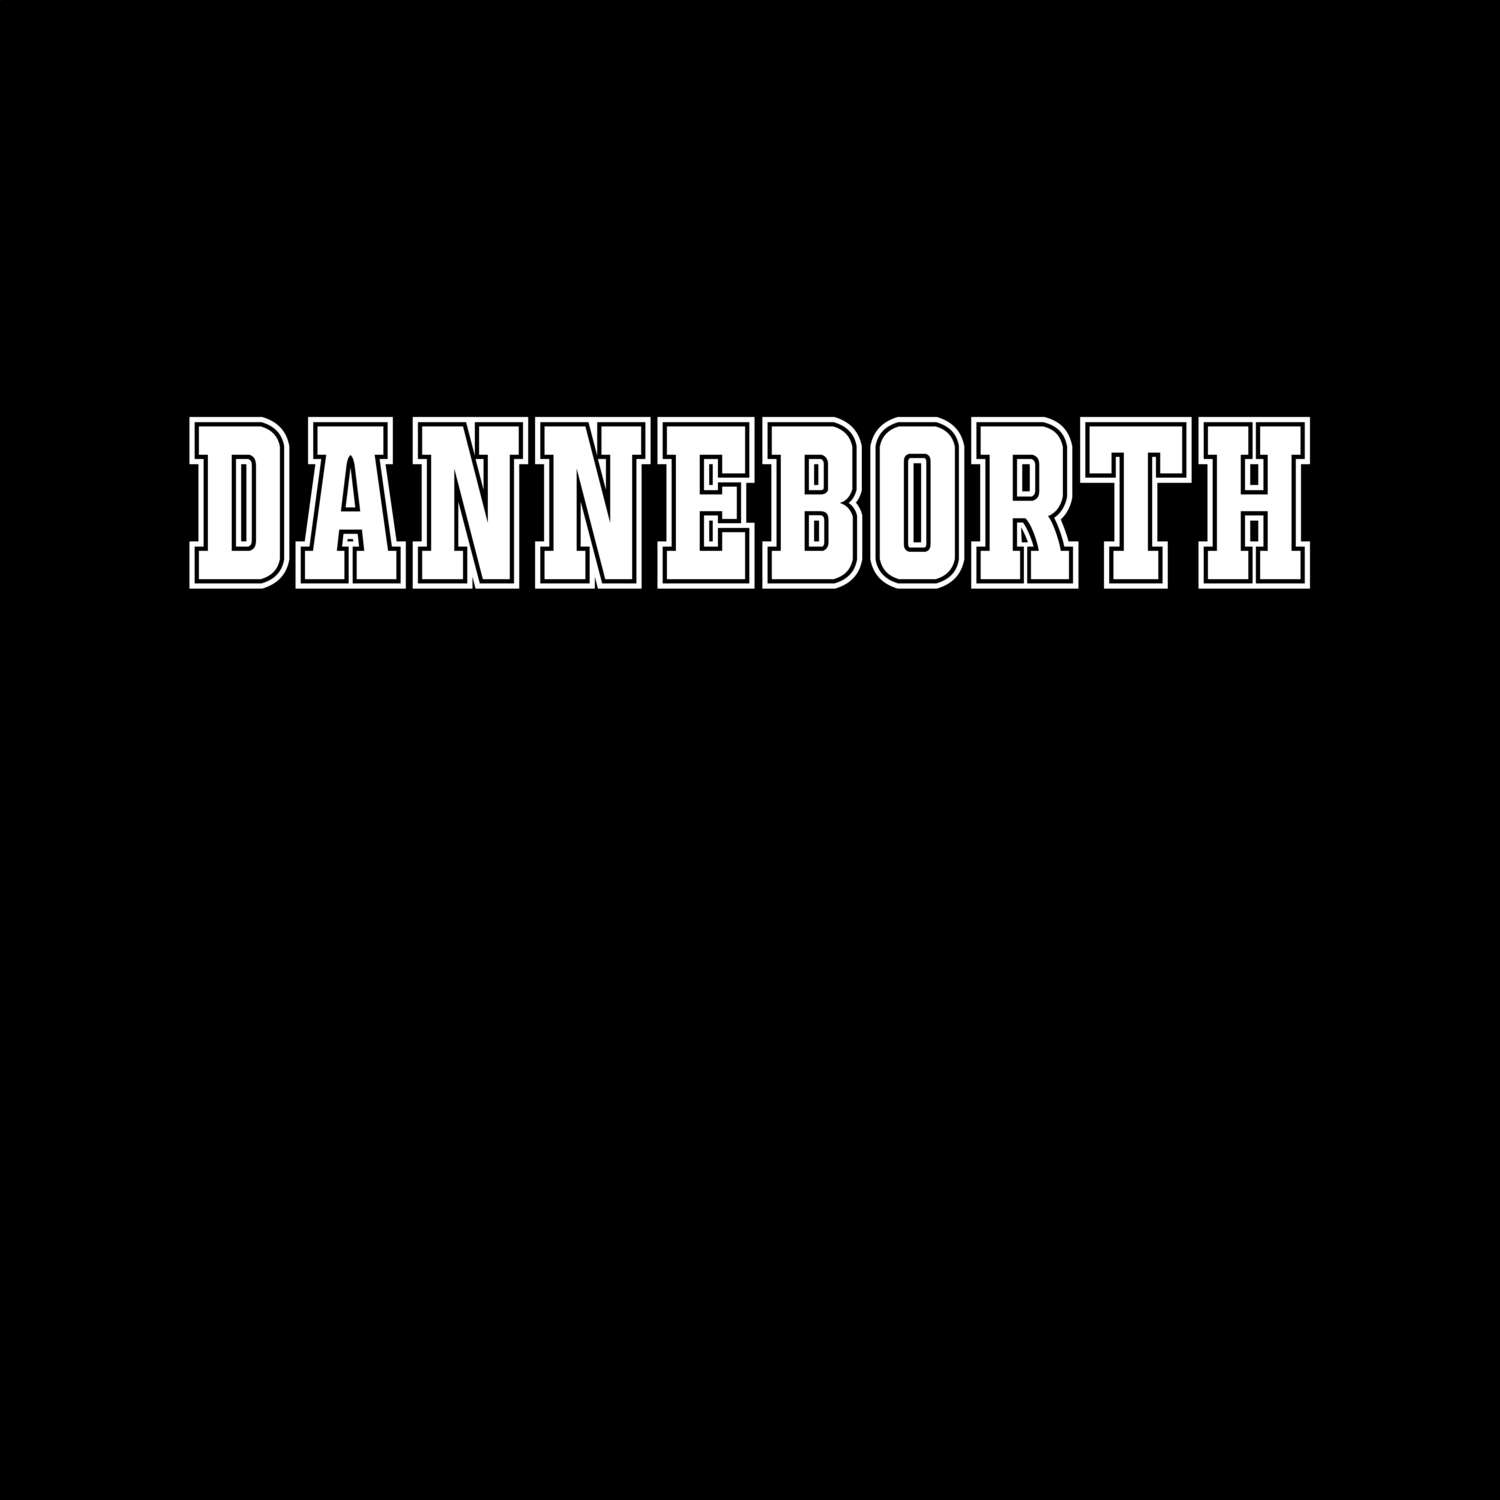 Danneborth T-Shirt »Classic«